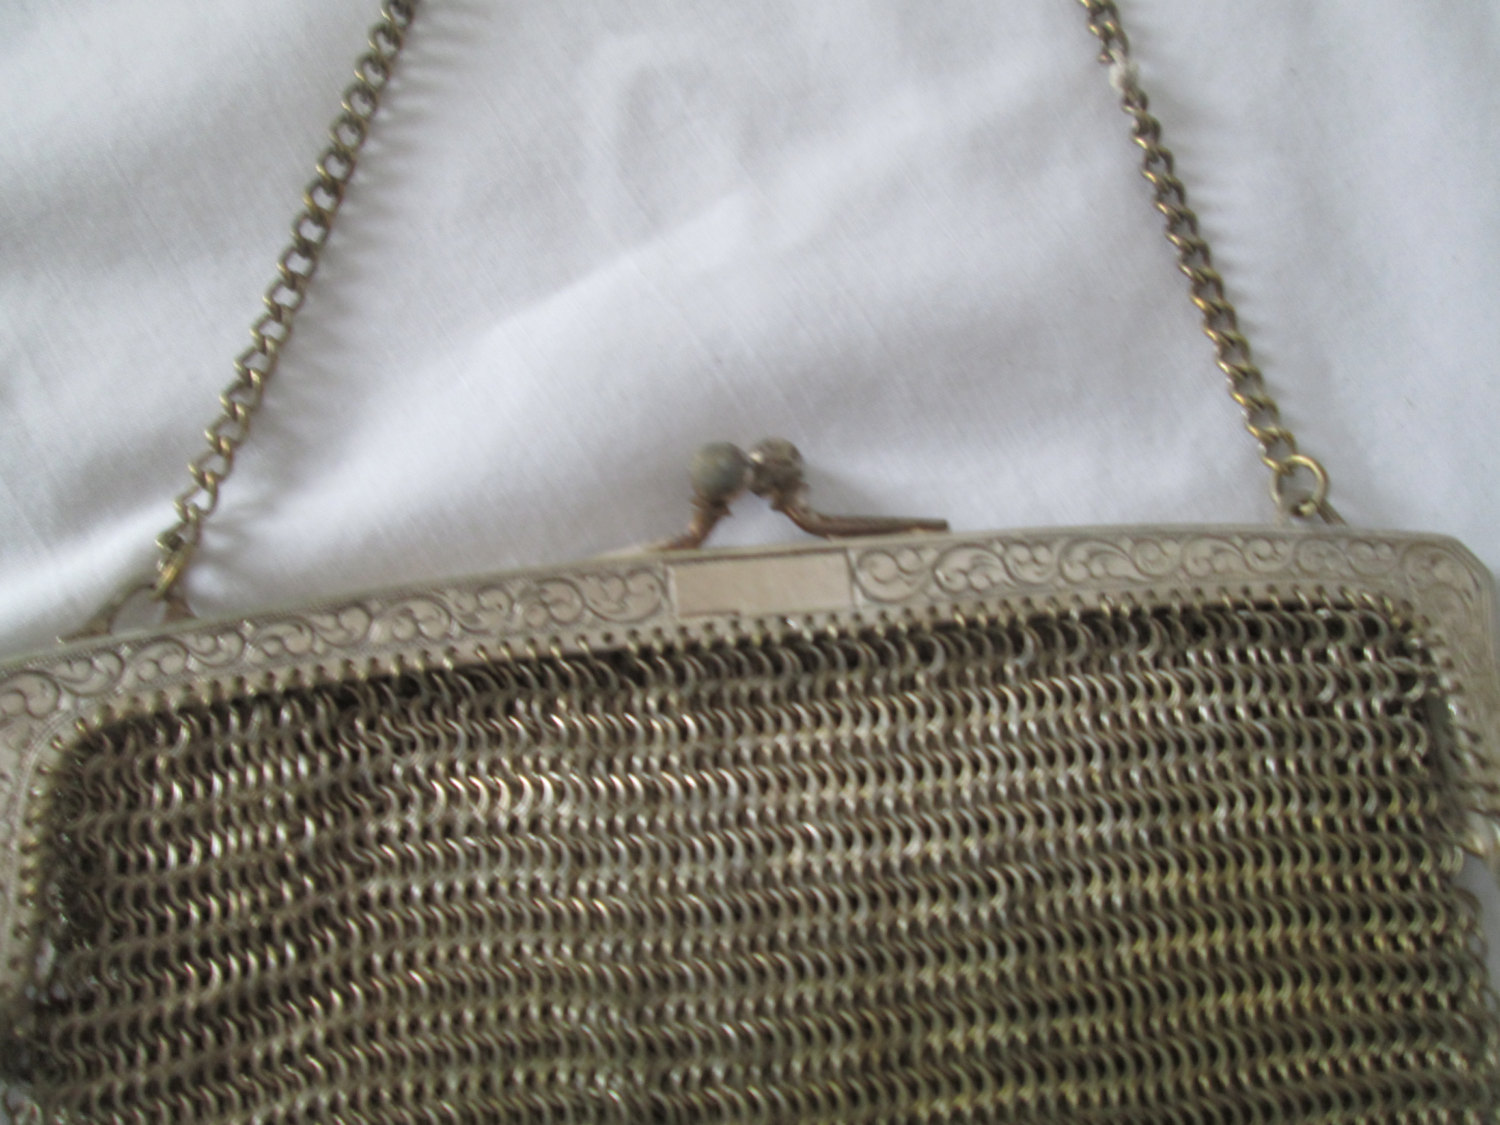 modern marcel : vintage chain purse necklace | the maker